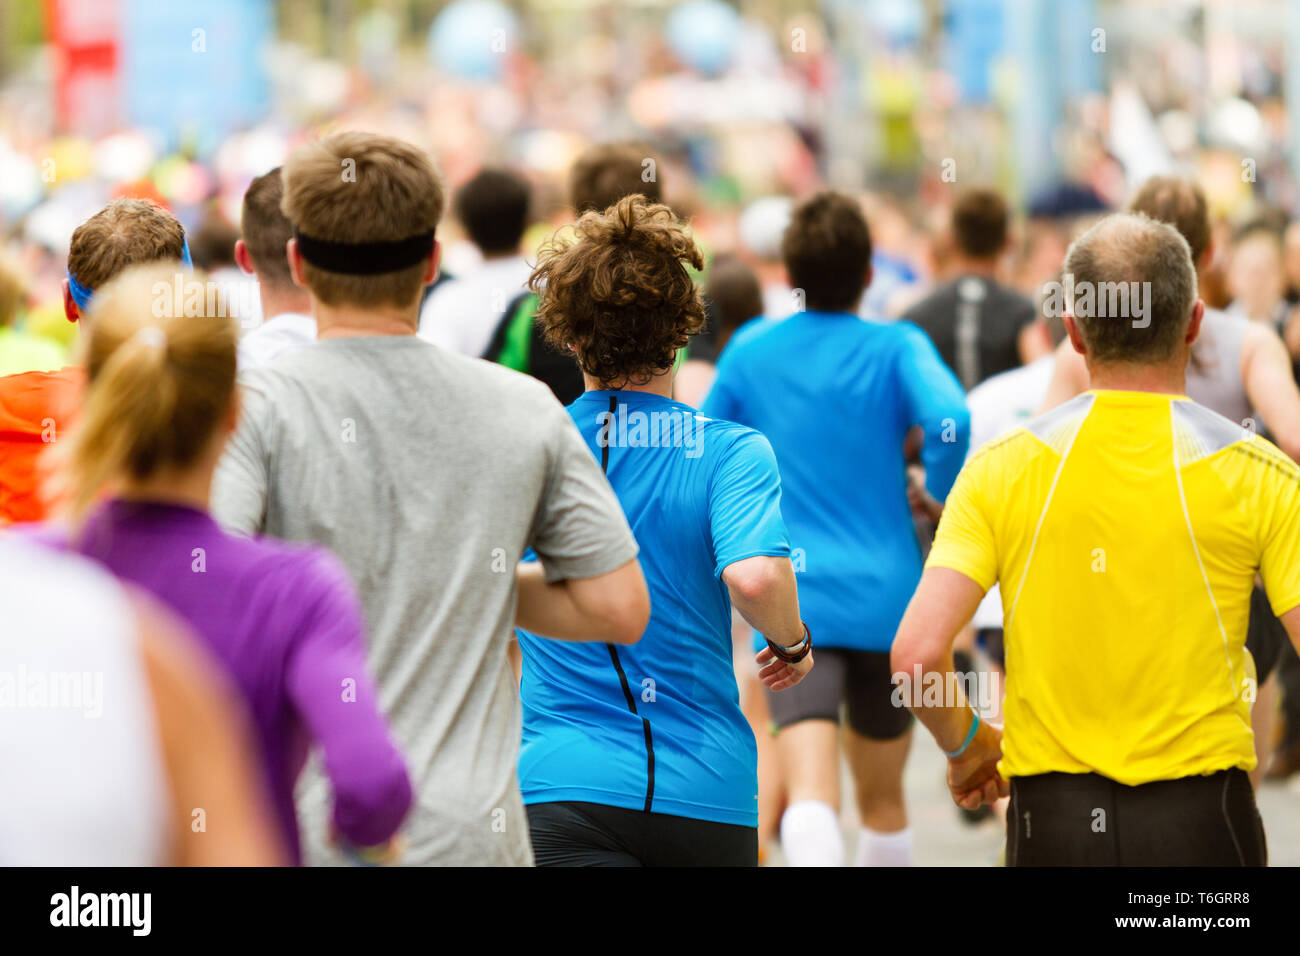 Running crowd at the marathon Stock Photo